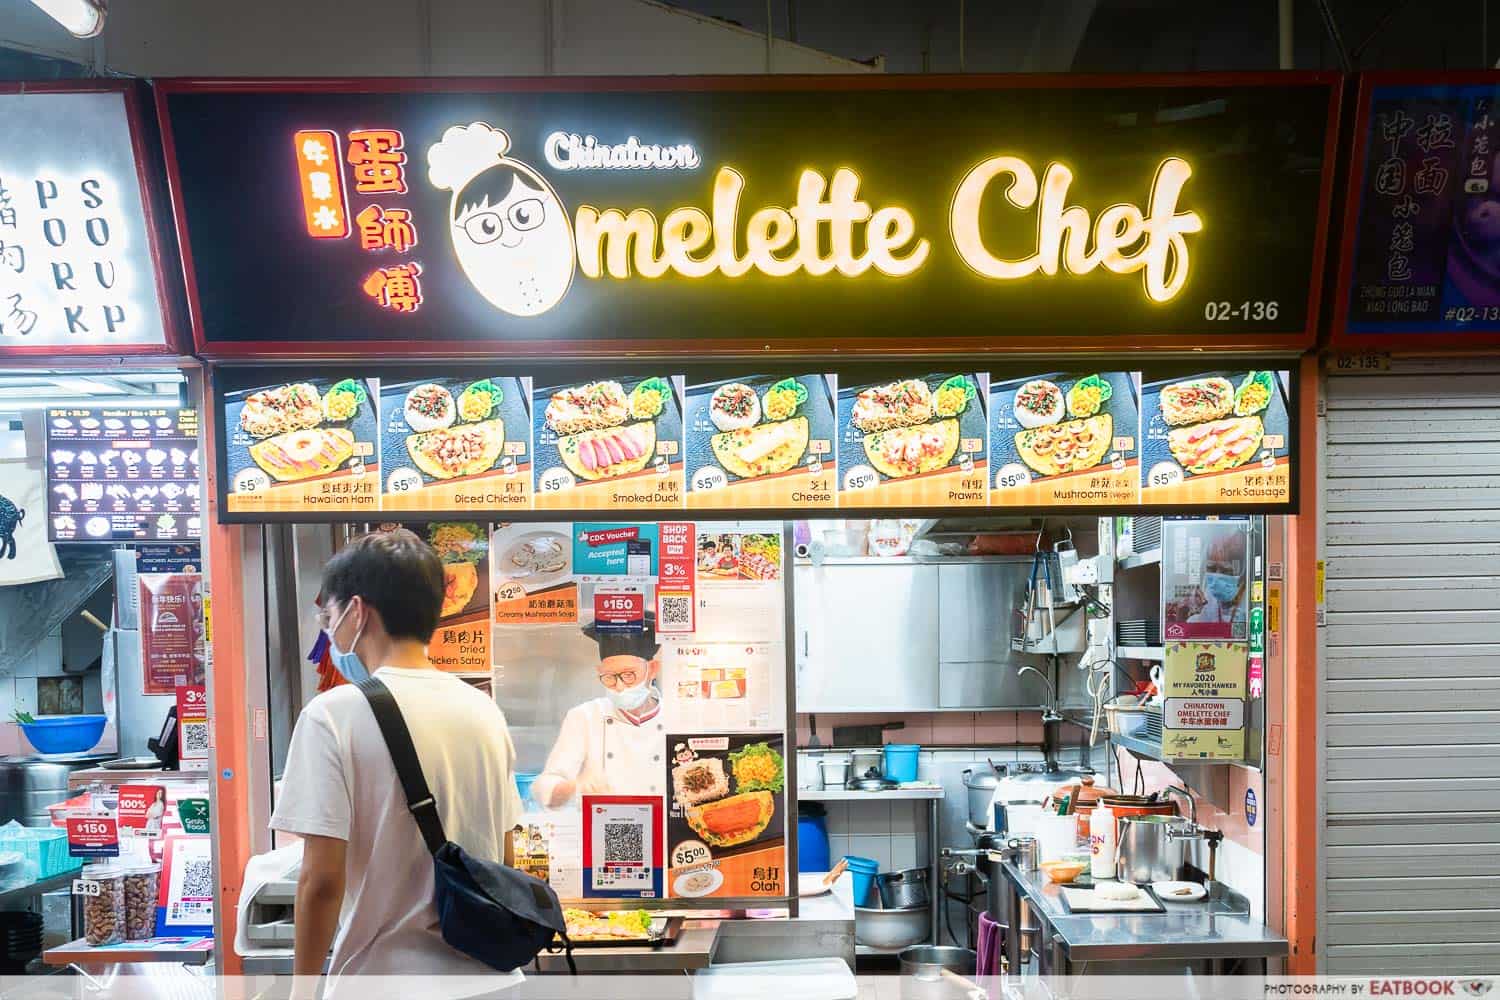 omelette-chef-storefront